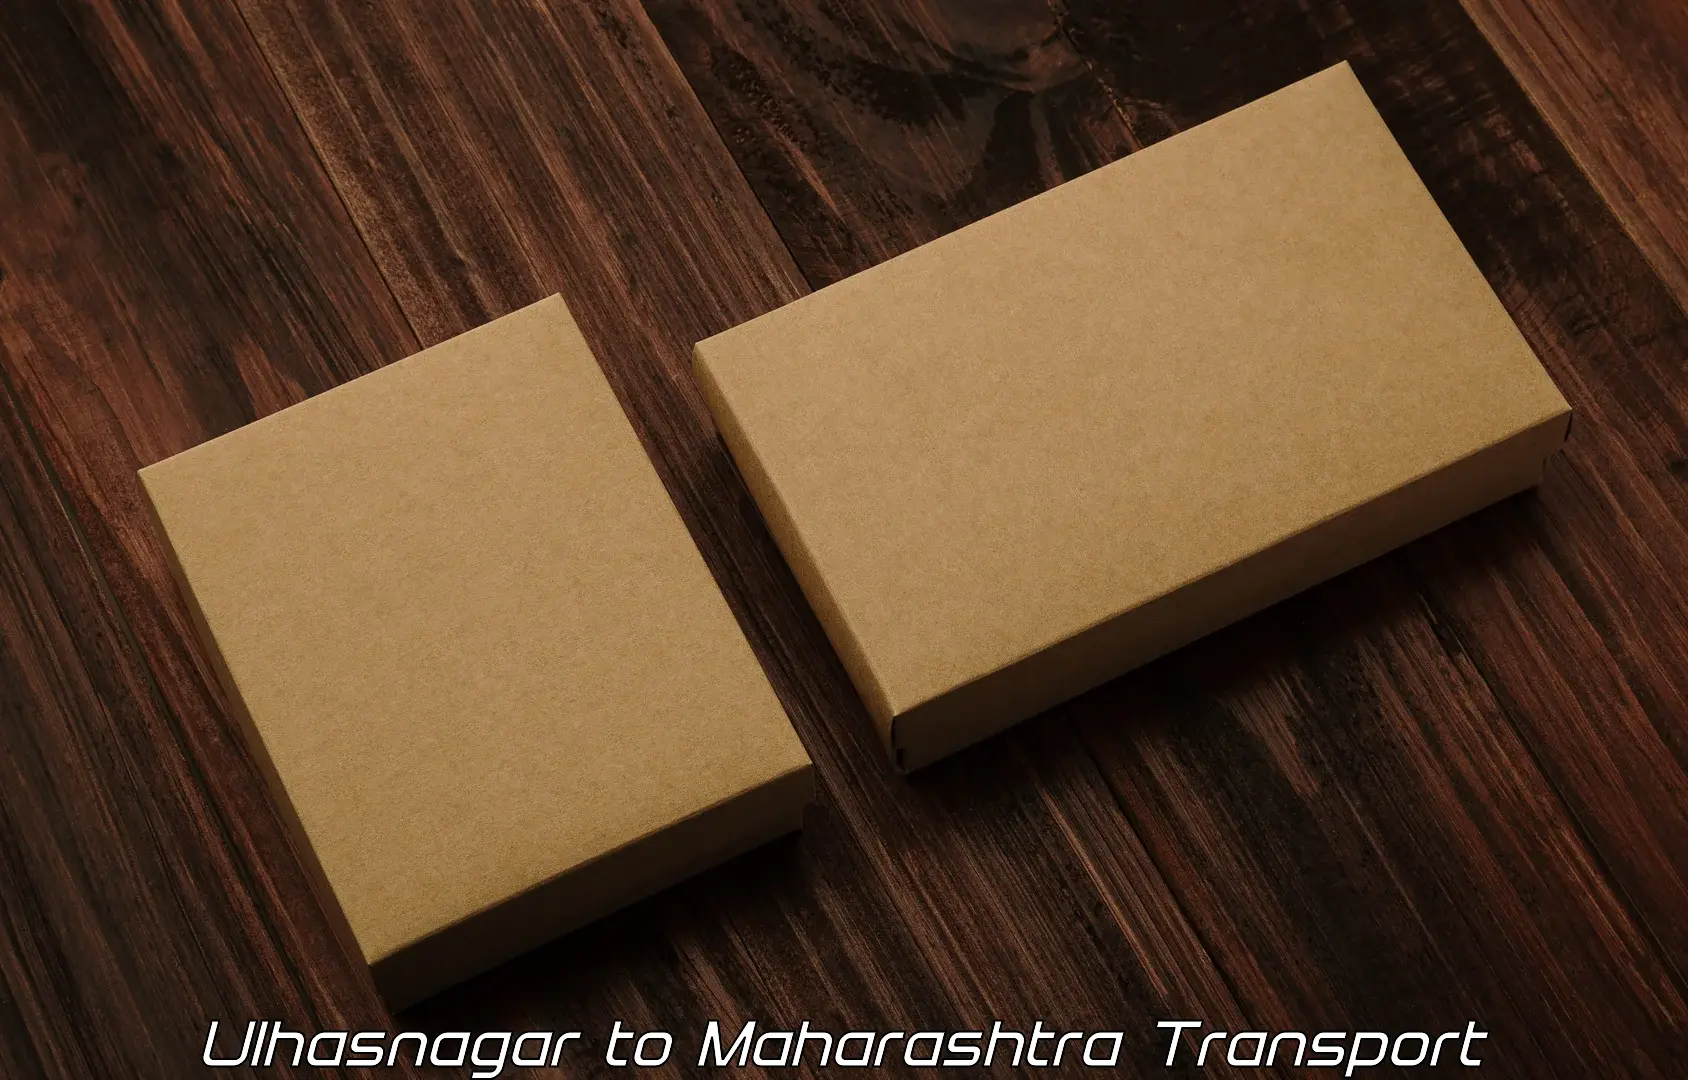 Nearest transport service Ulhasnagar to Pune